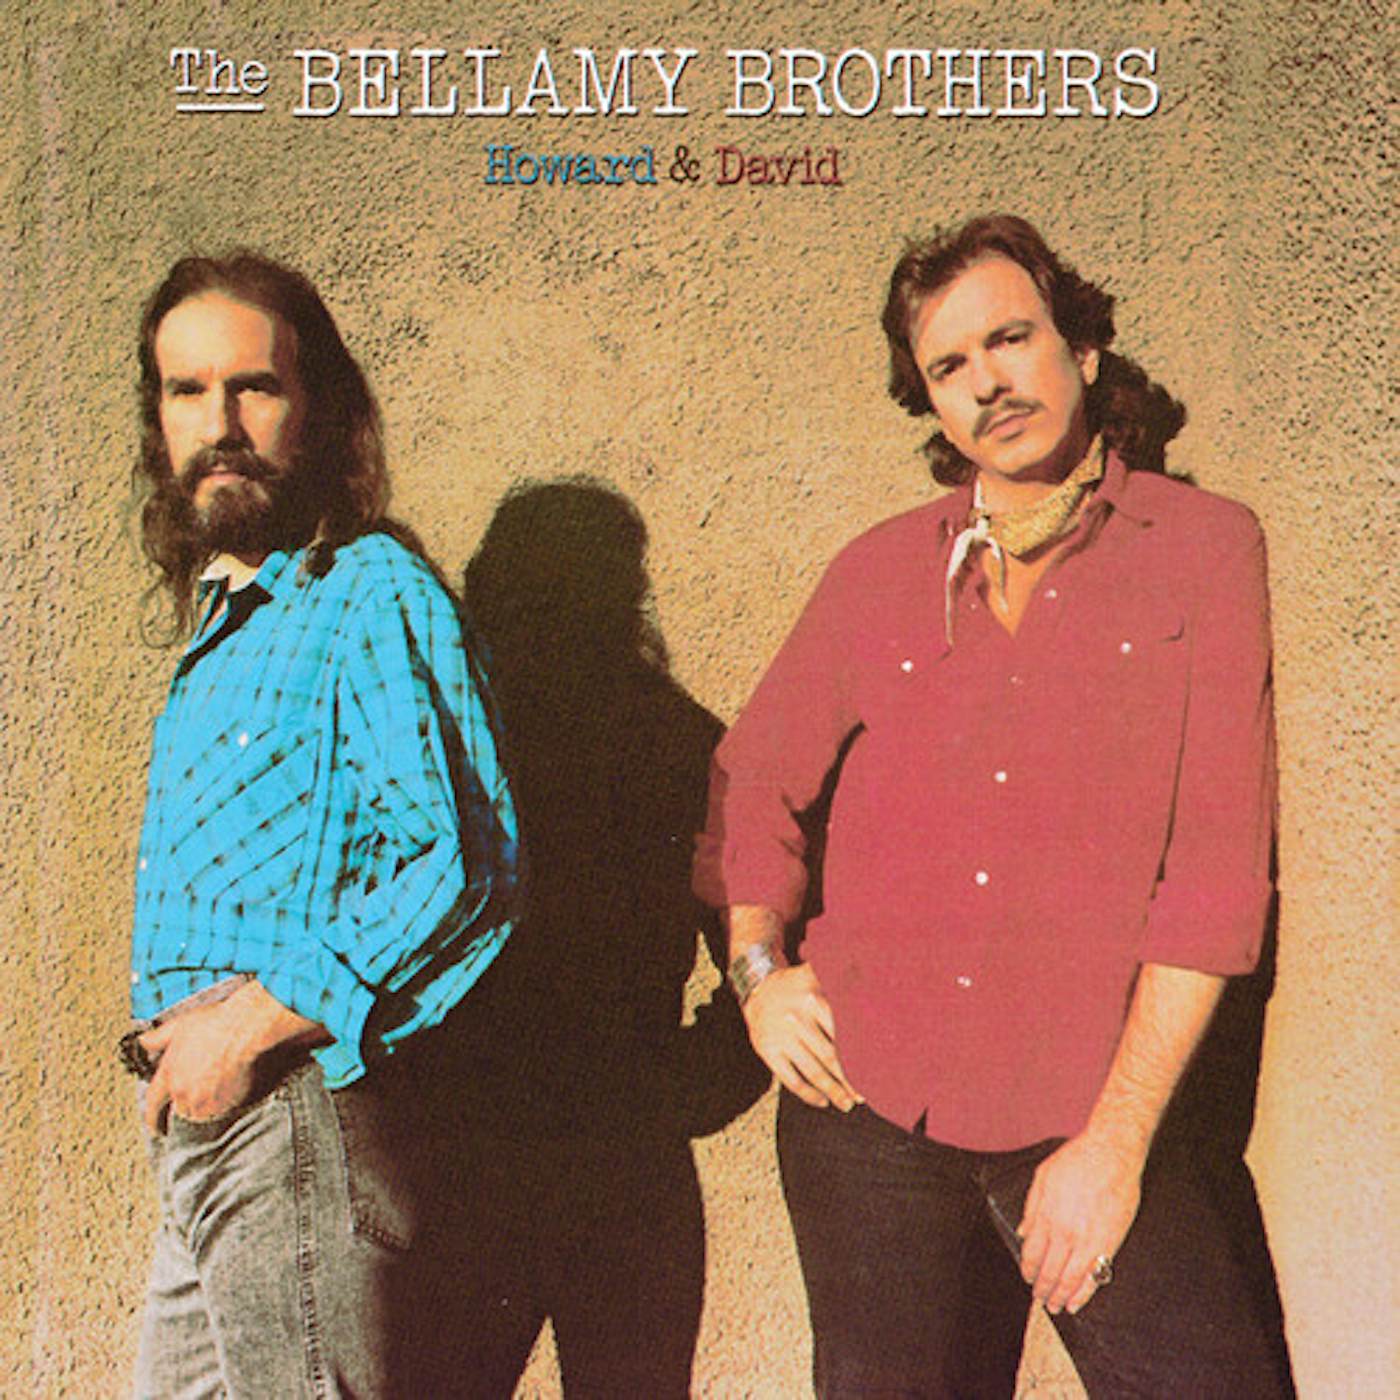 The Bellamy Brothers HOWARD & DAVID CD